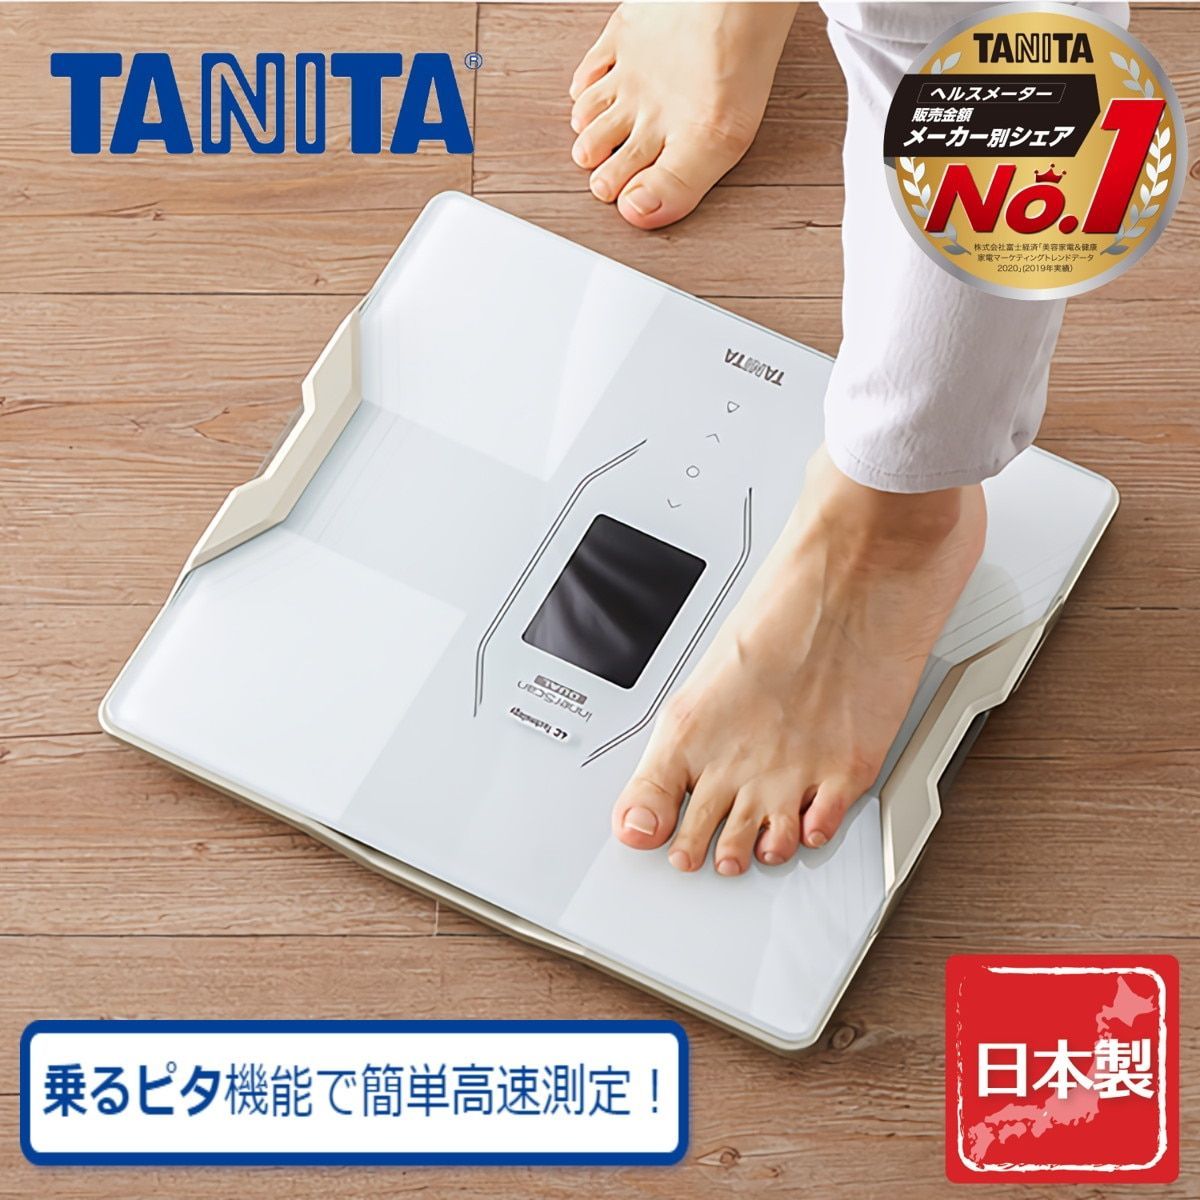 TANITA RD-907-GD - 美容/健康